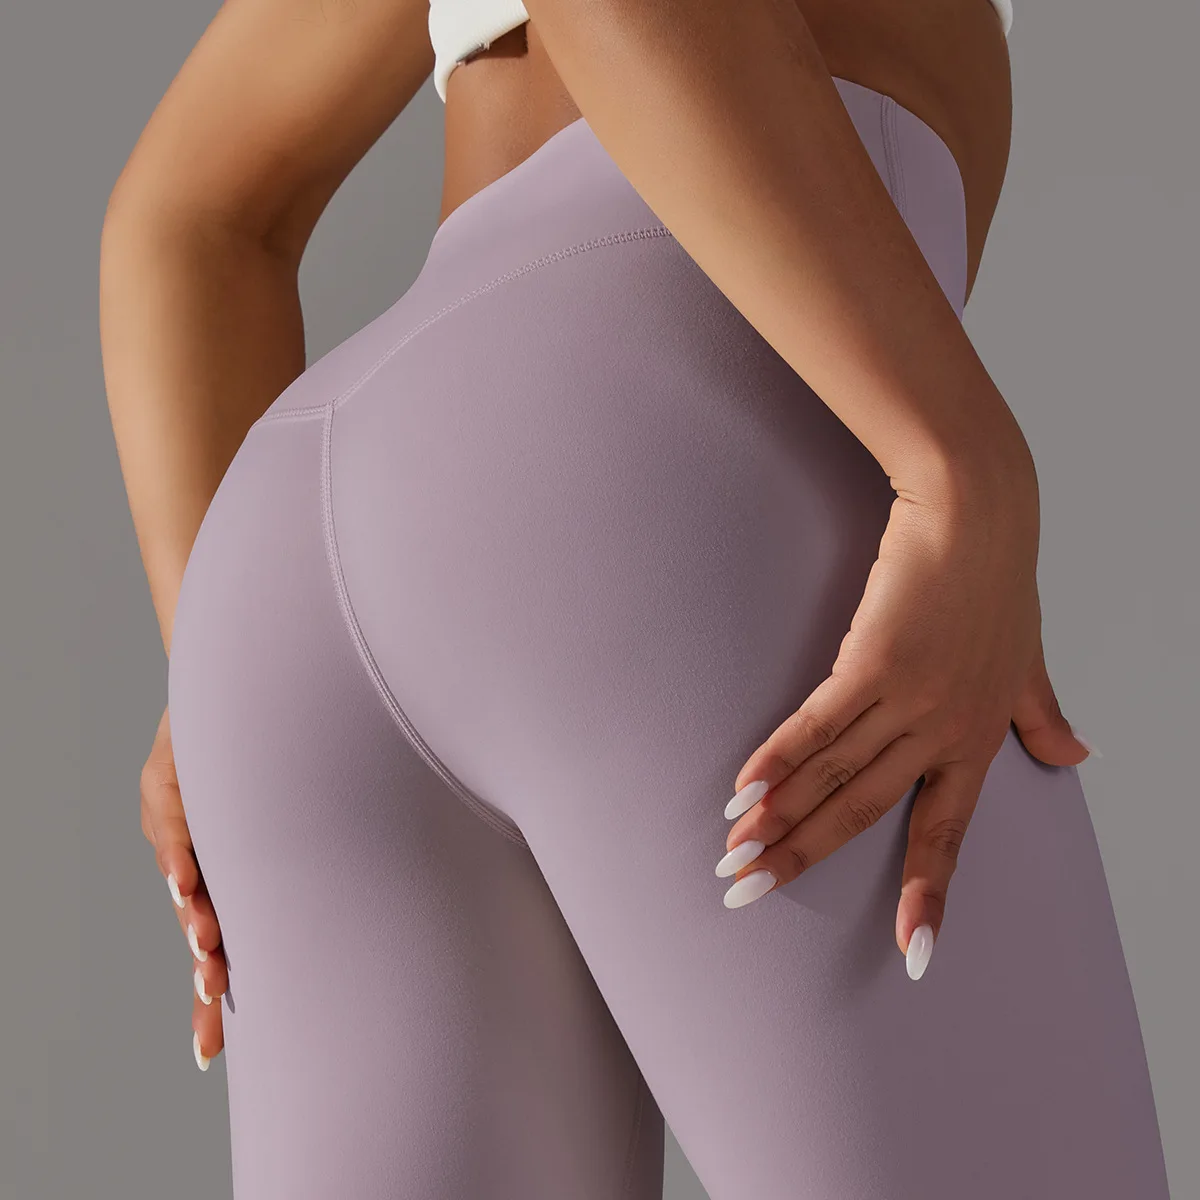 Cht-leggings Women's High Waist Yoga Pants Tummy Control Scrunched